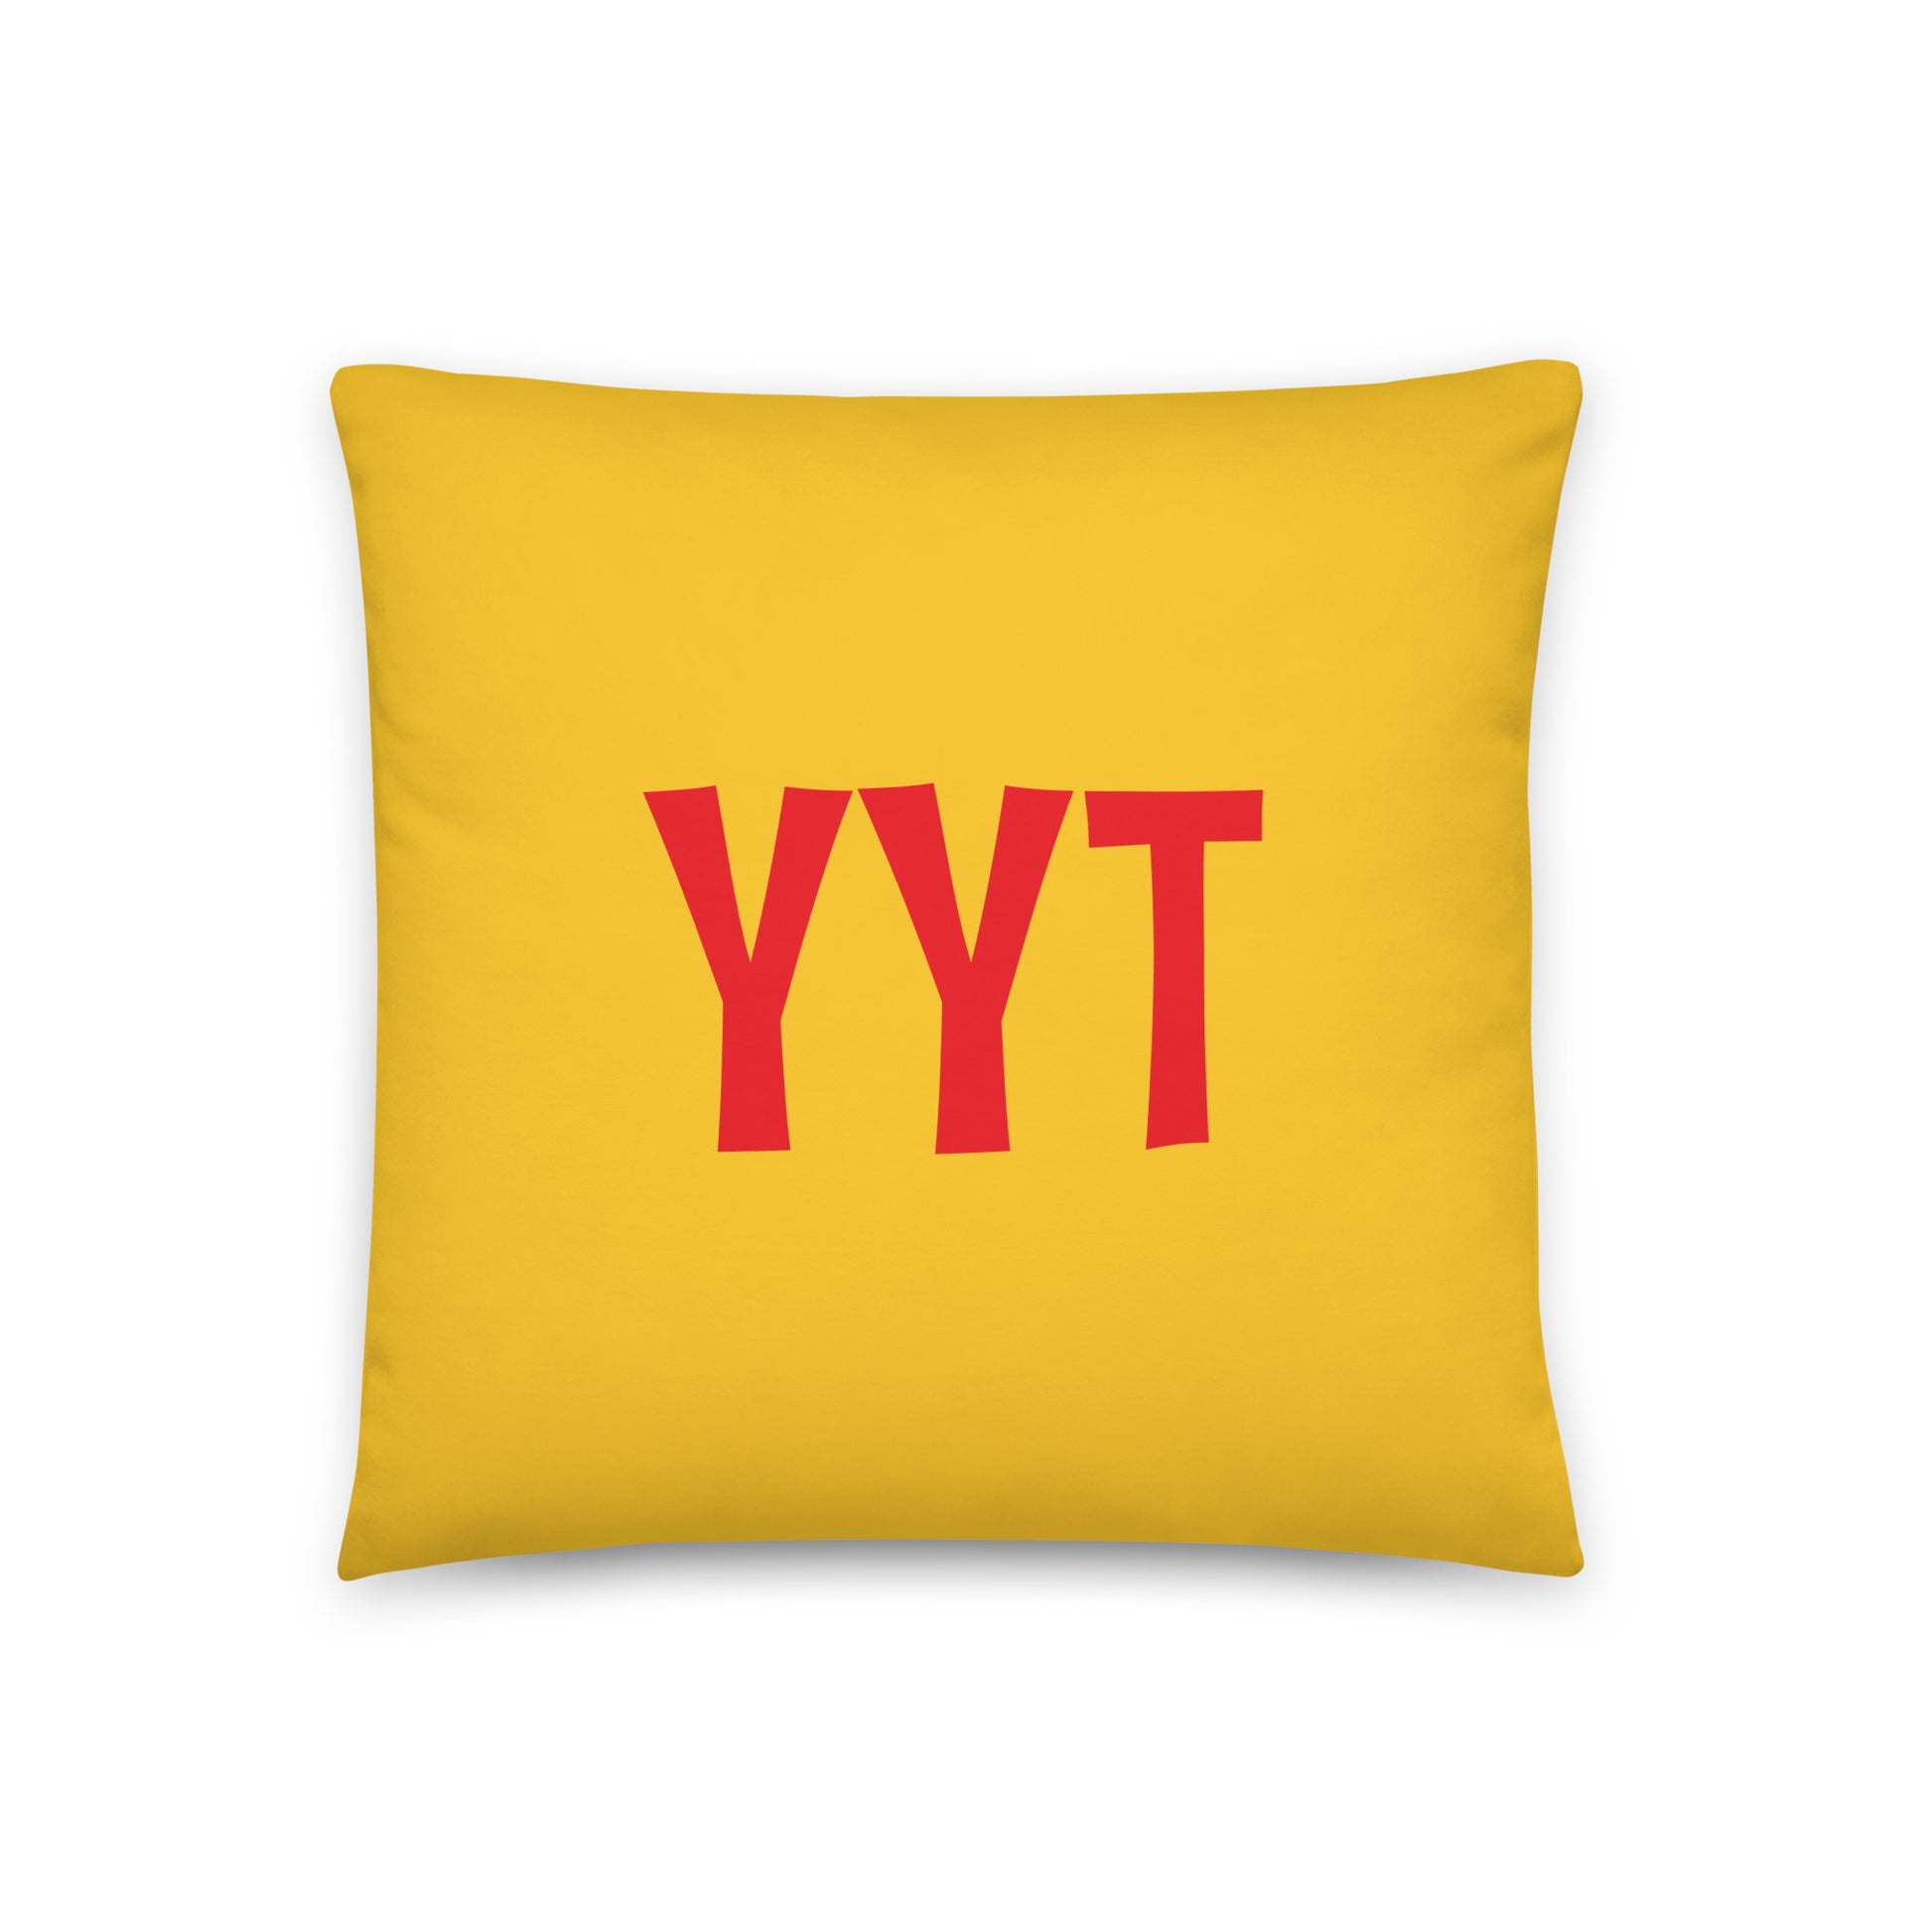 Rainbow Throw Pillow • YYT St. John's • YHM Designs - Image 03